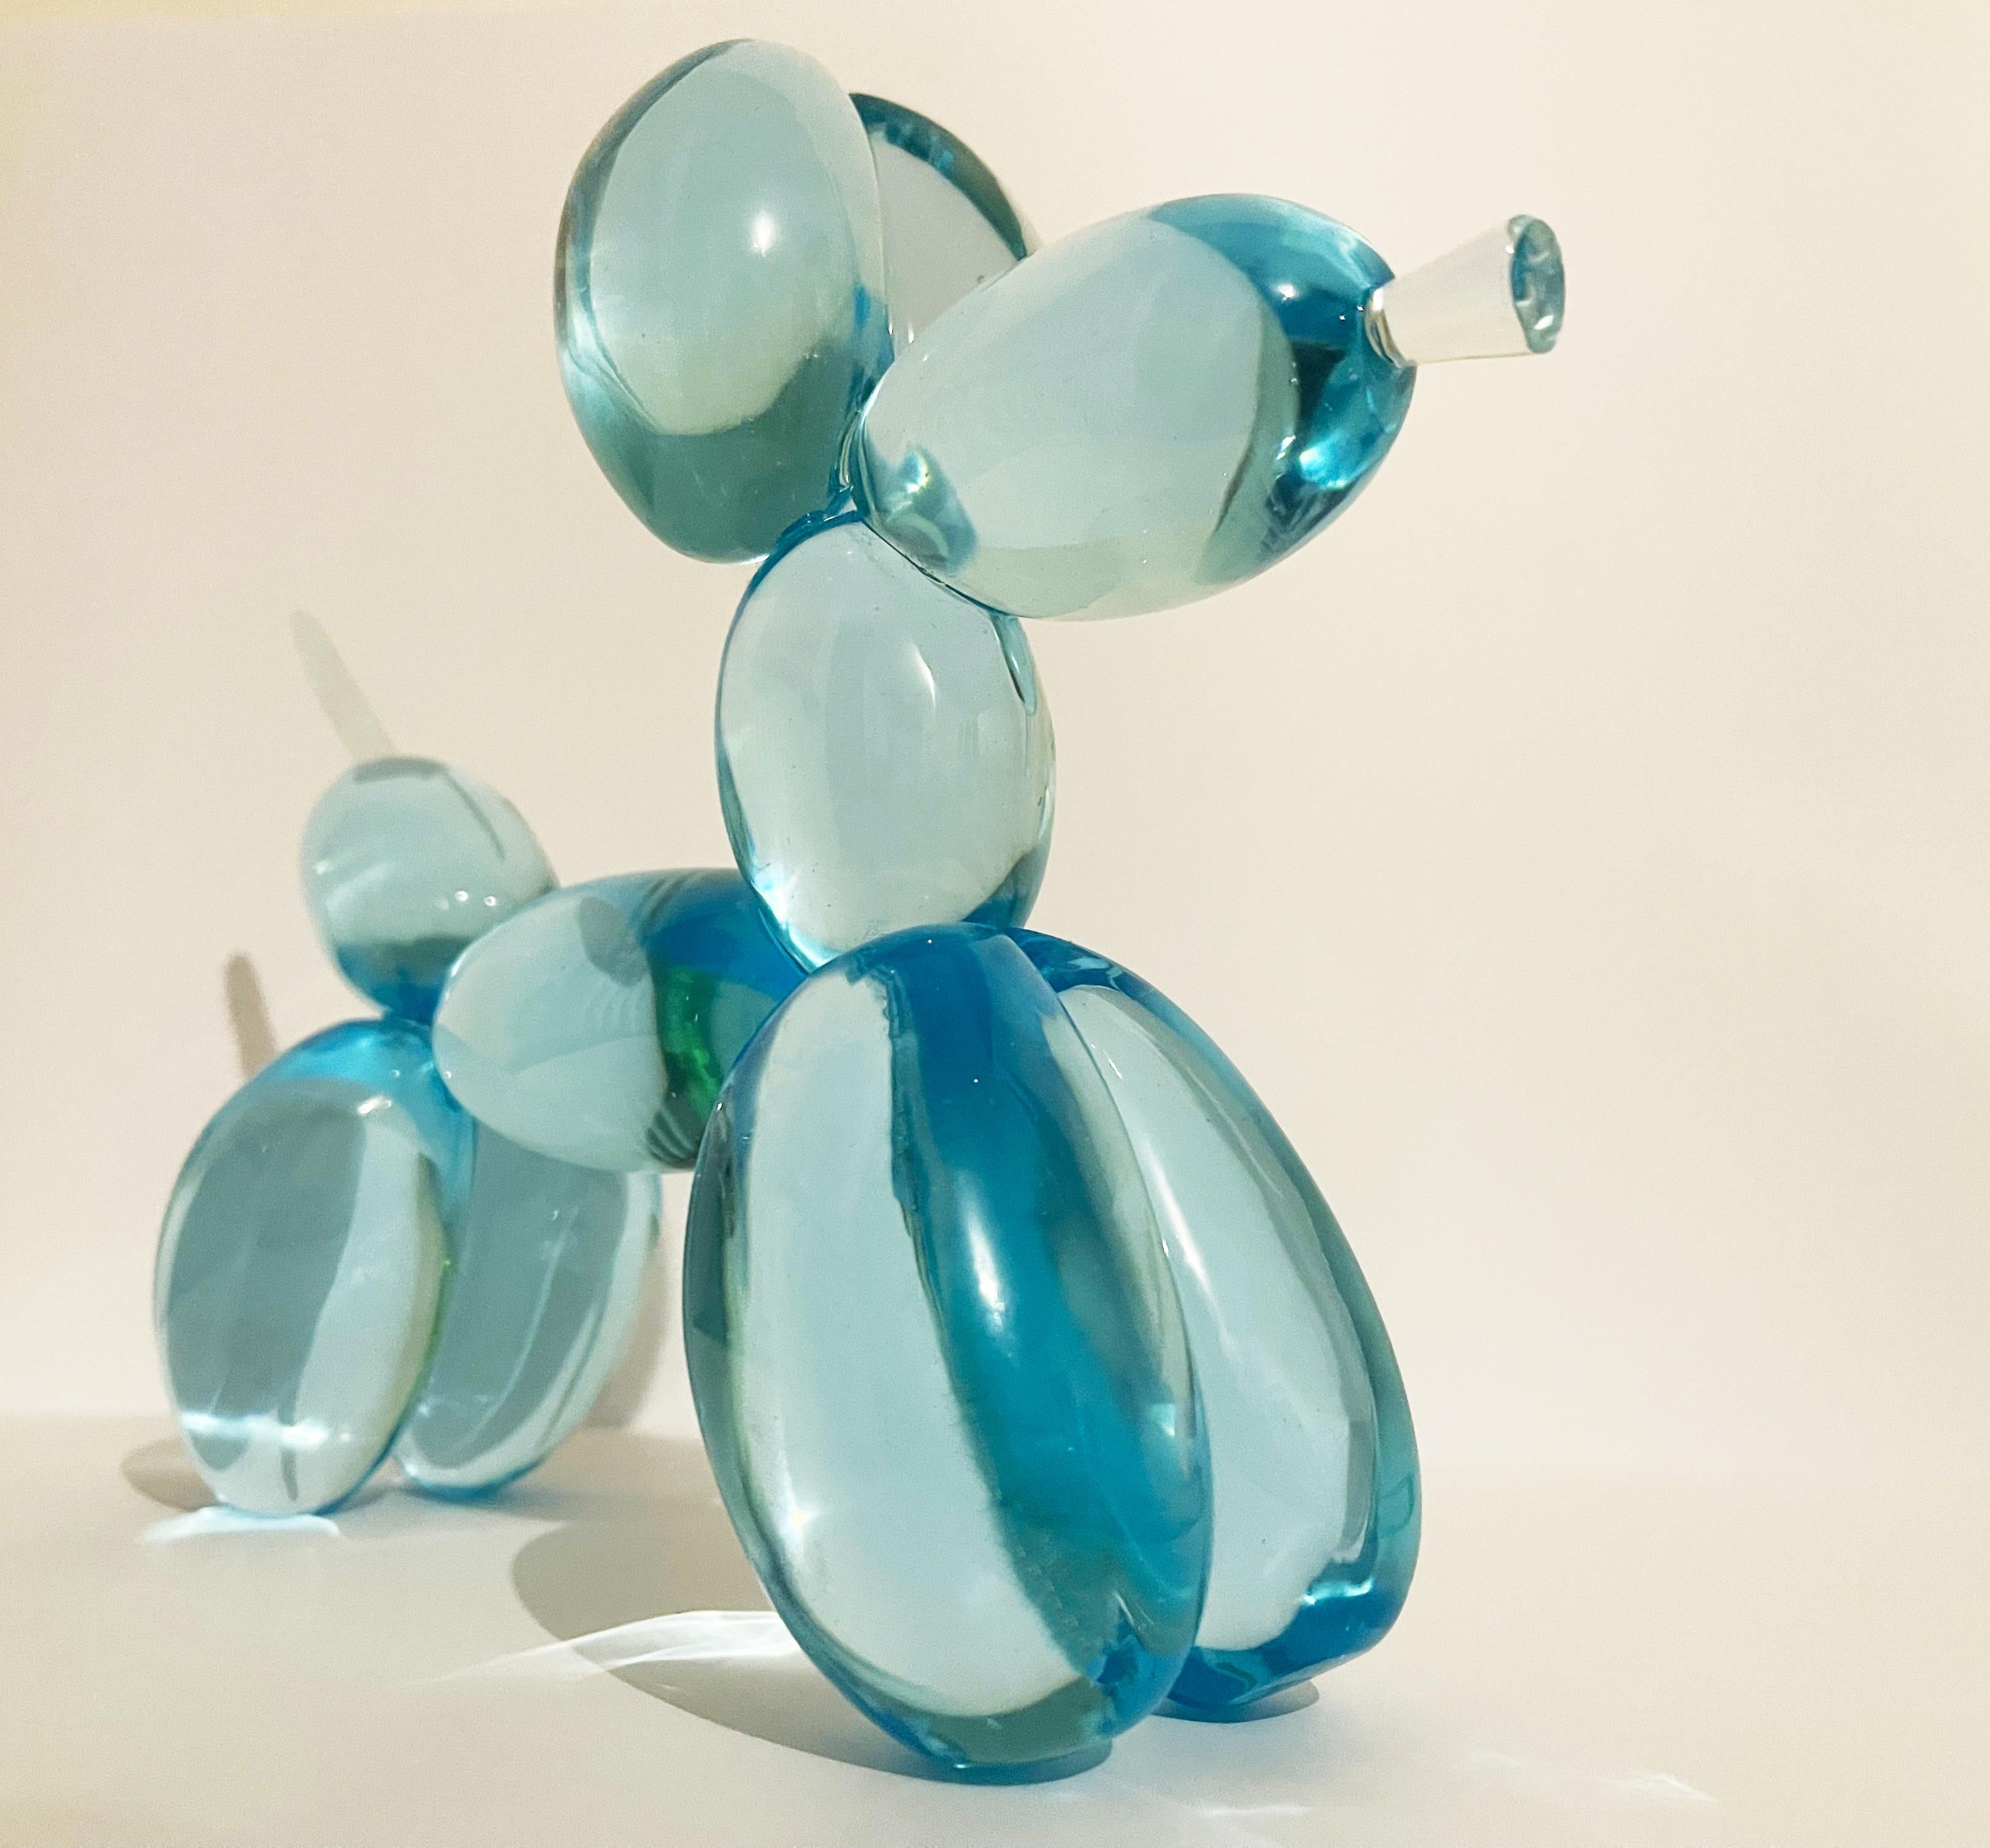 Glass Contemporary 'Dog' Handmade Light Blue Crystal Sculpture by Ghirò Studio